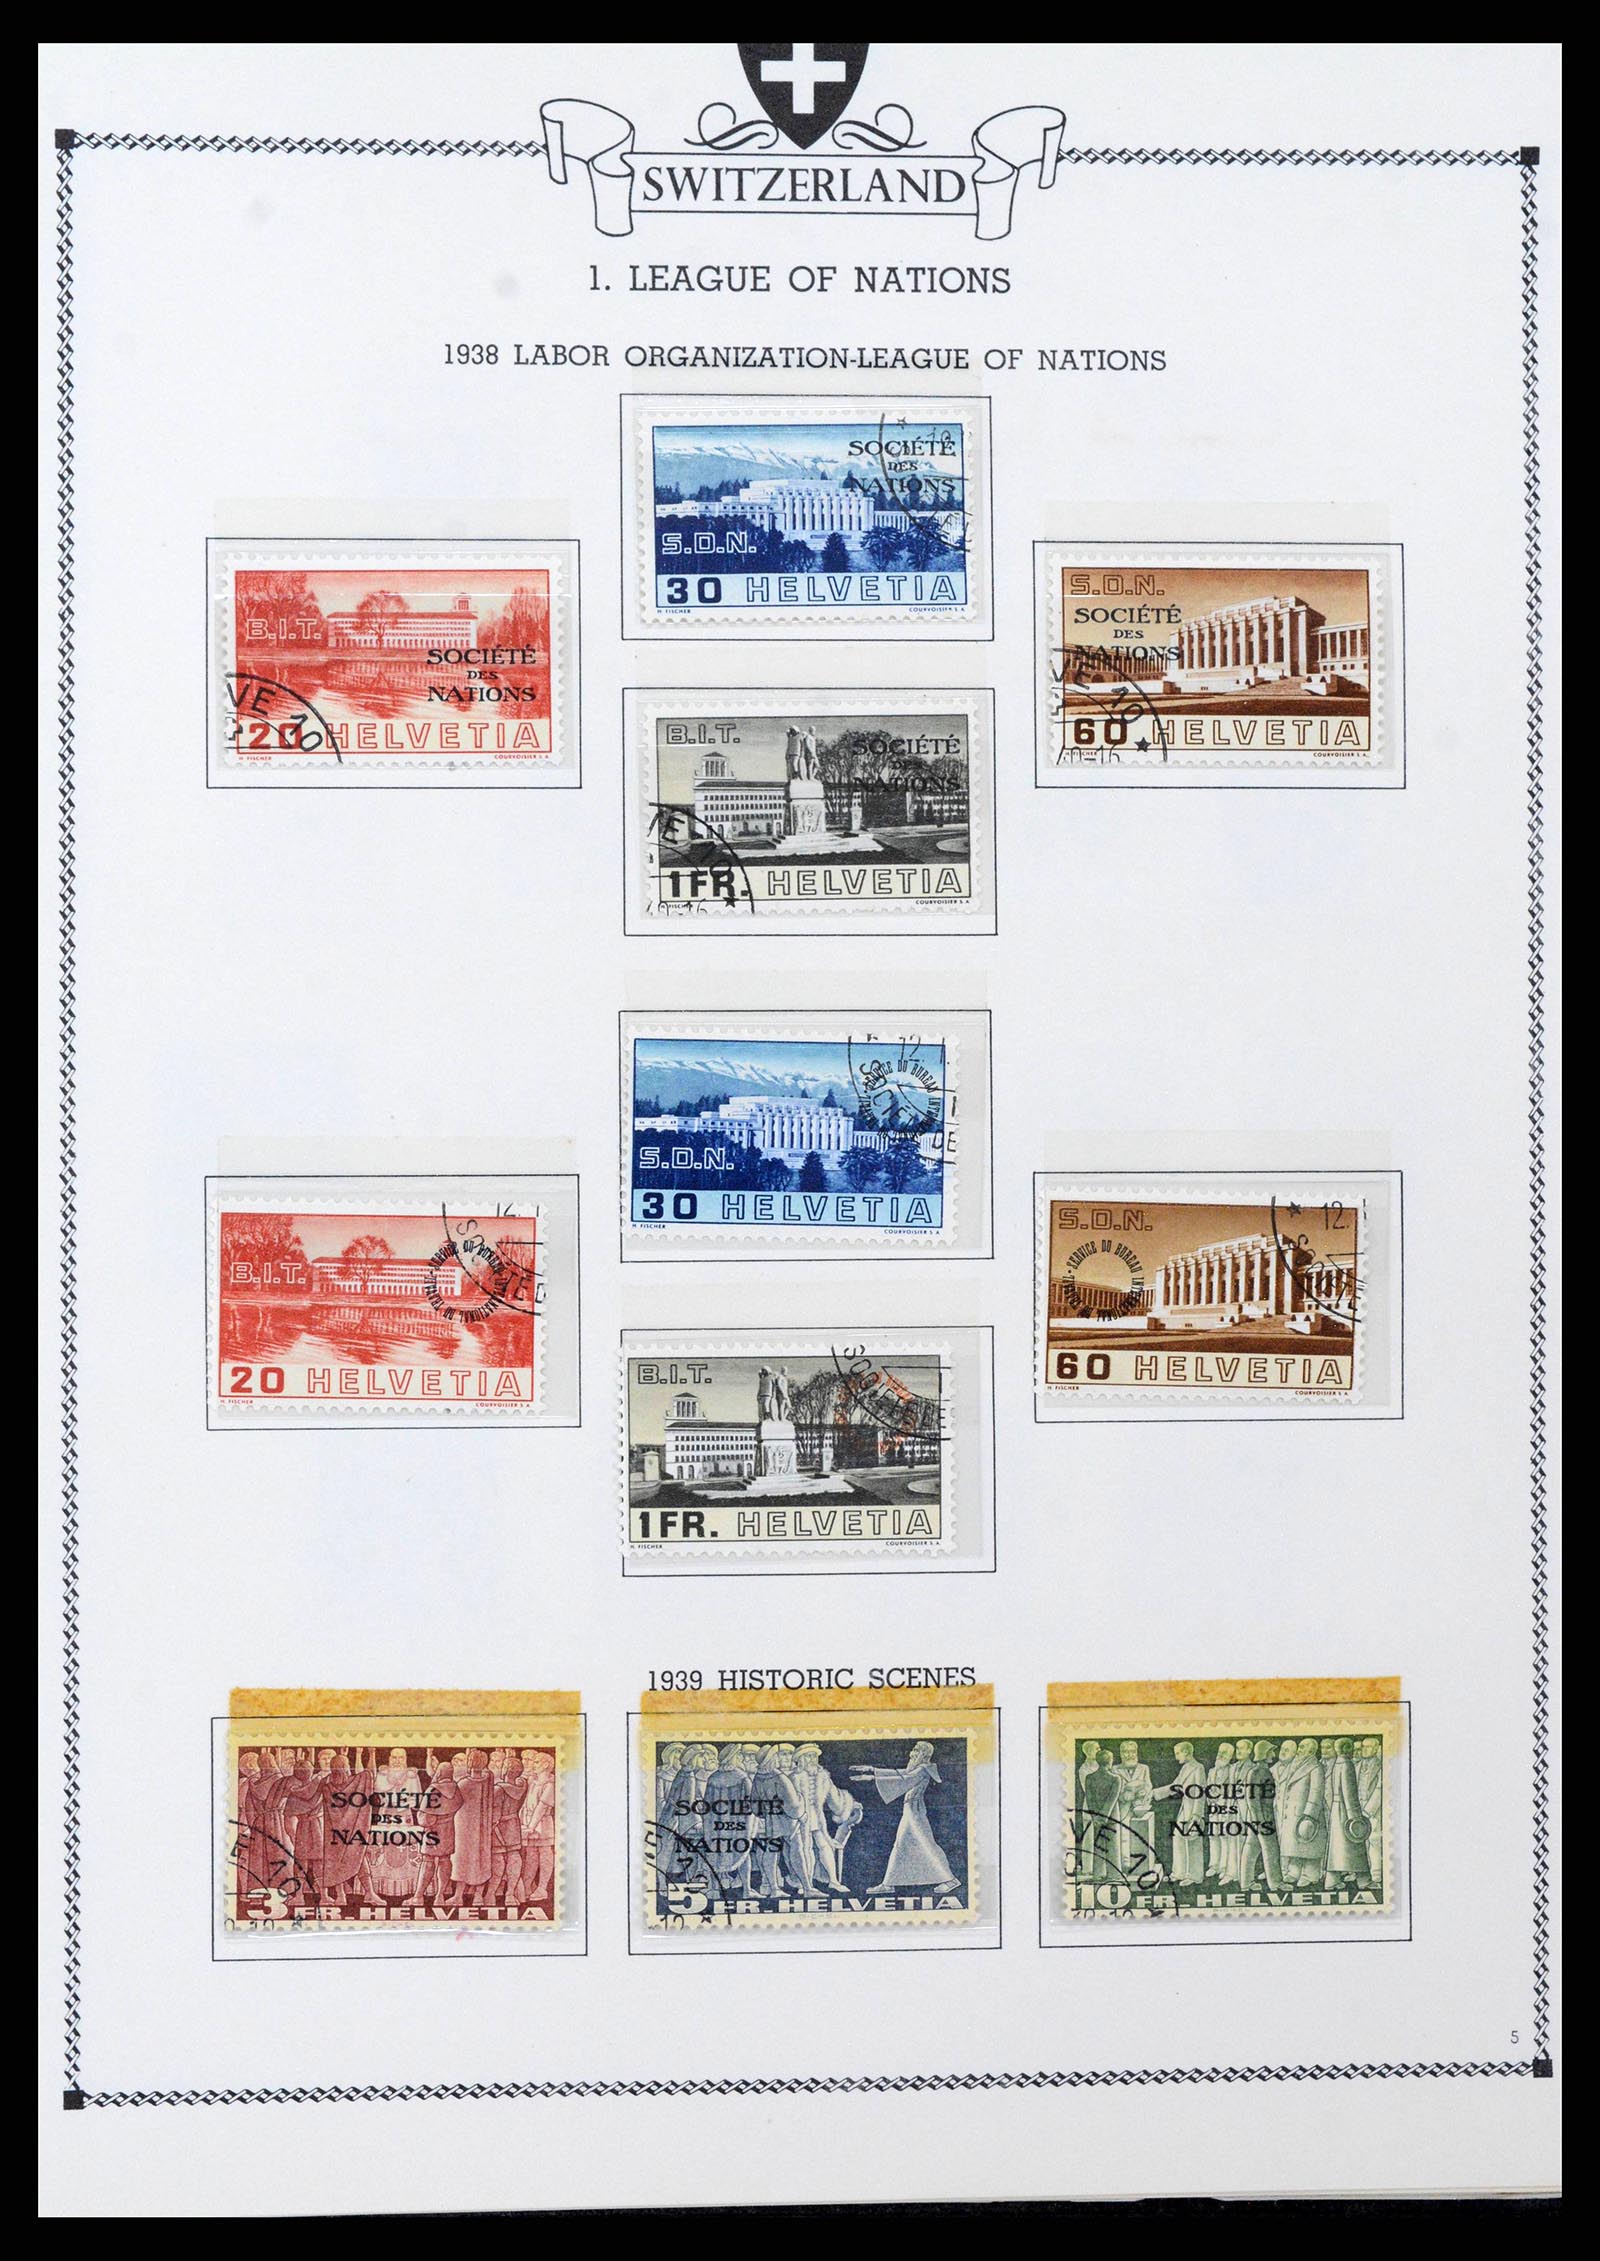 38905 0189 - Stamp collection 38905 Switzerland 1850-1995.